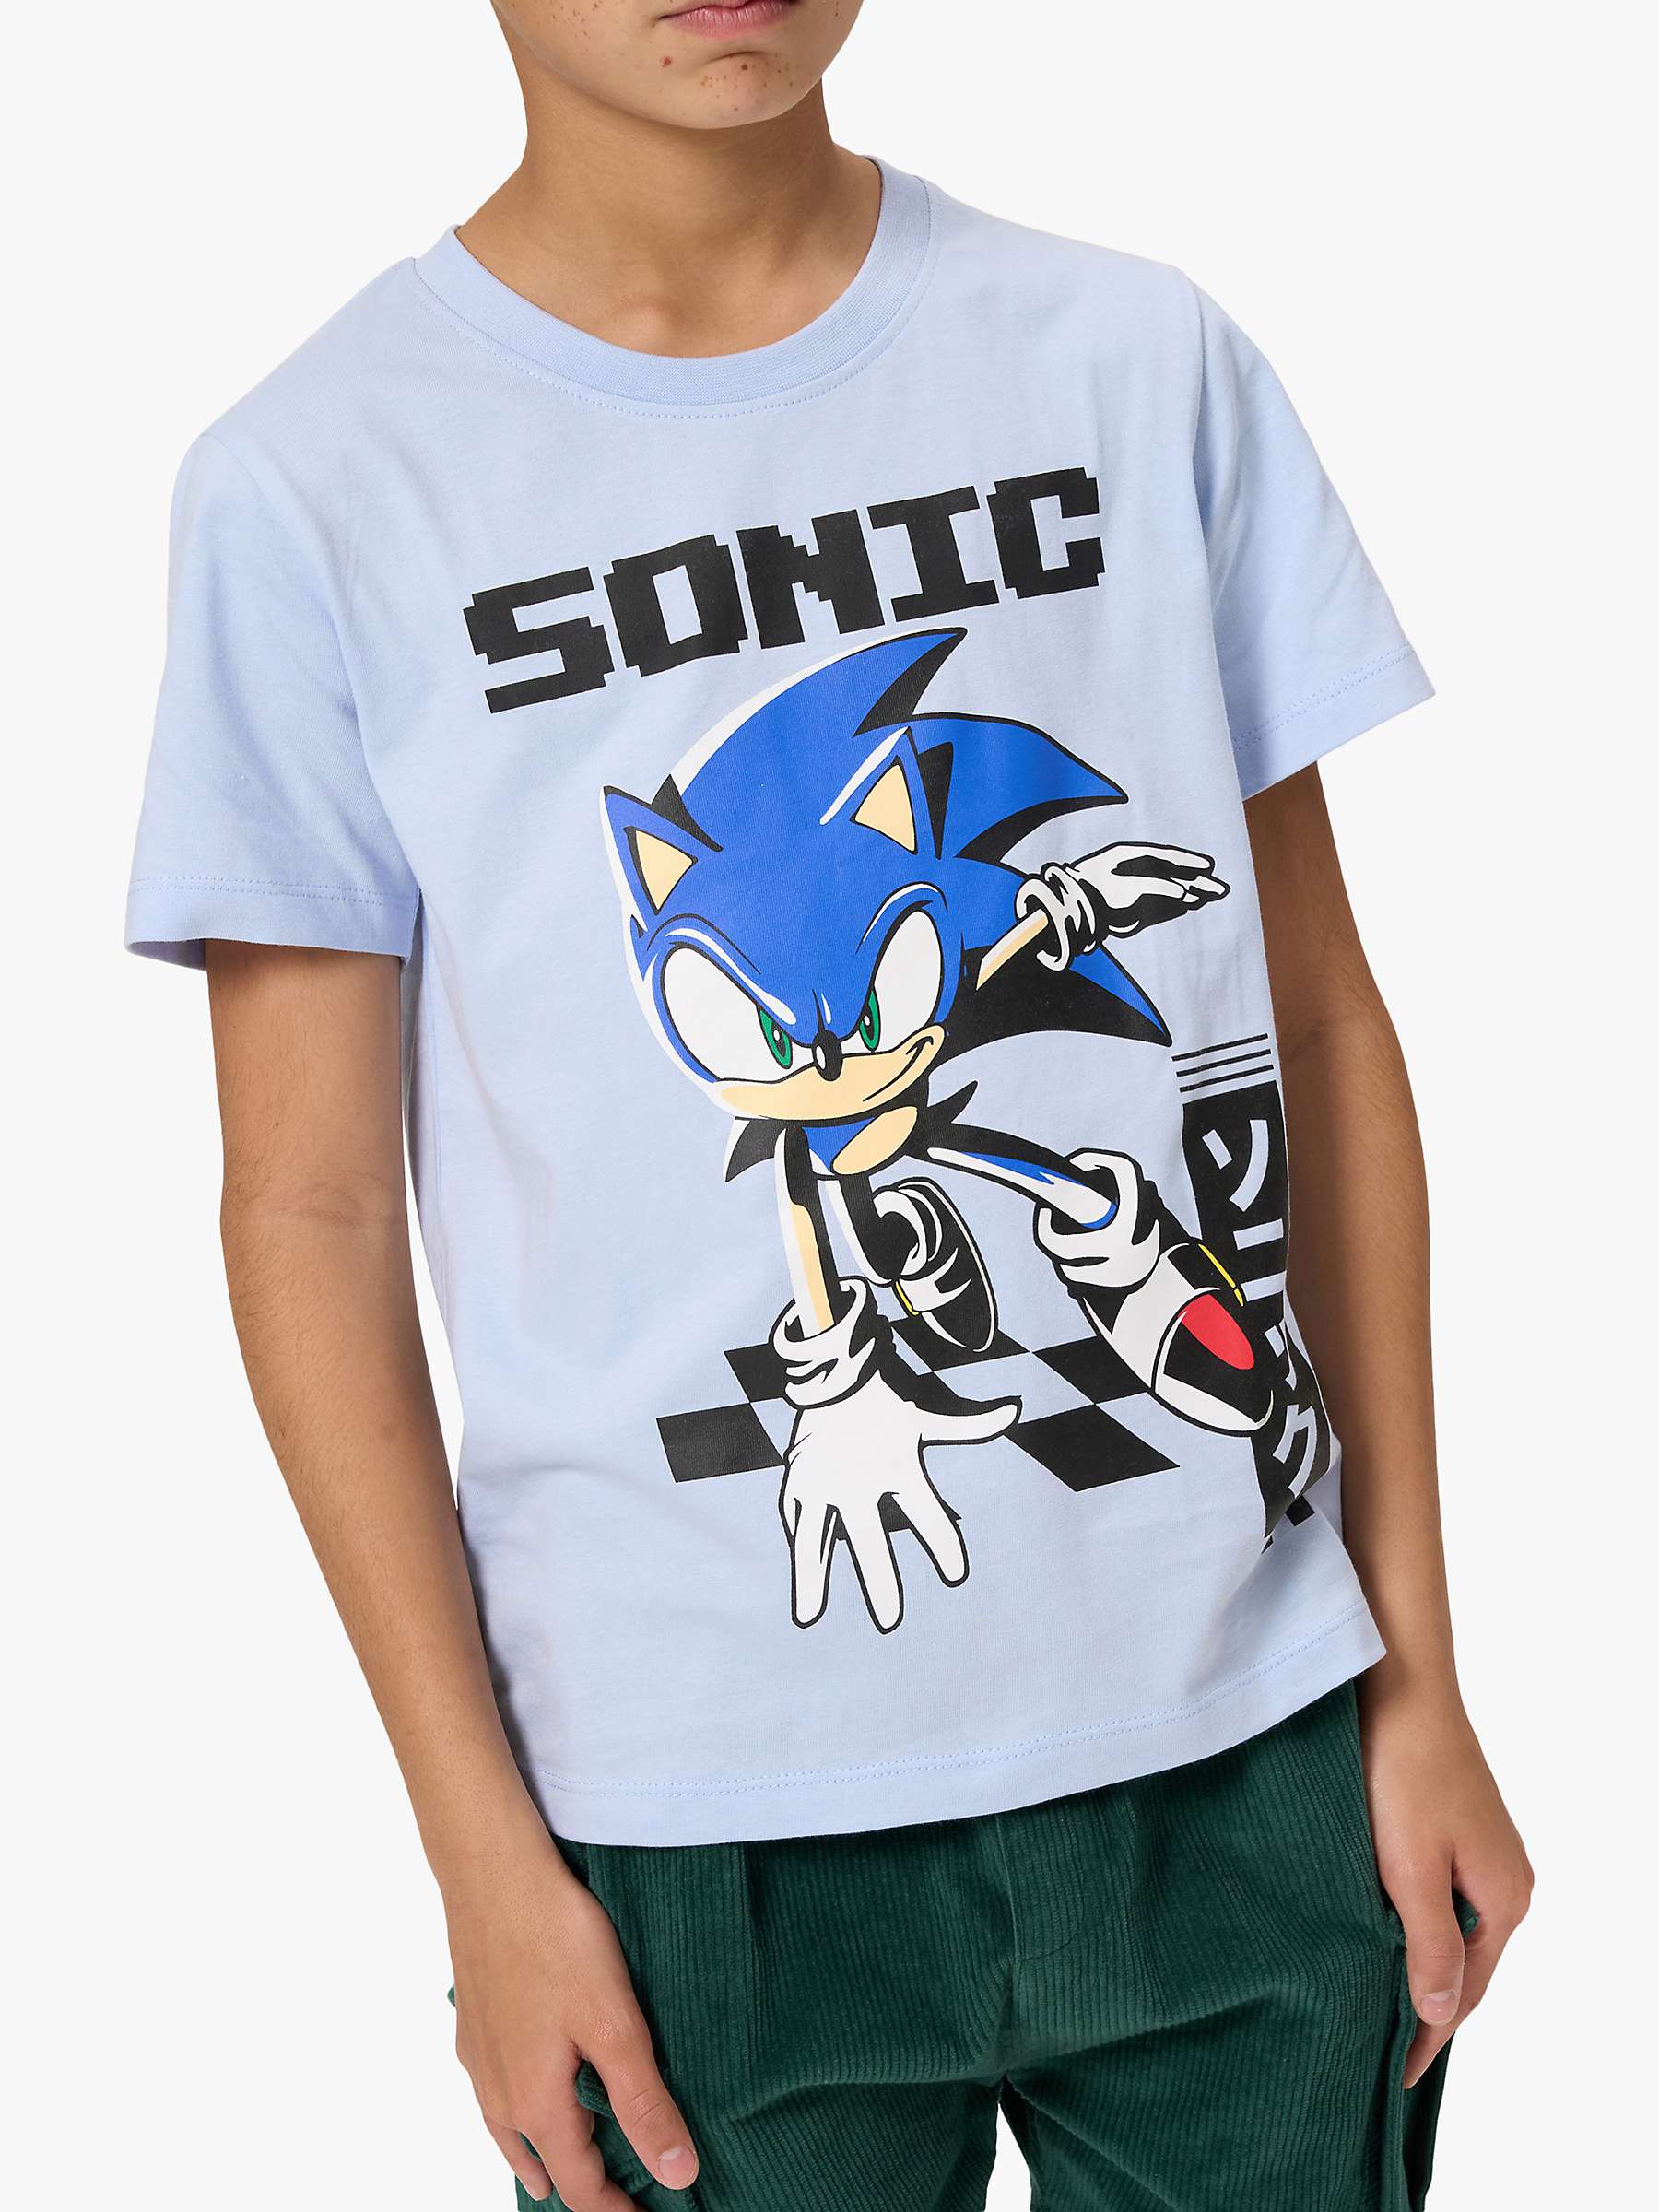 Buy Angel & Rocket Kids' Sonic Graphic T-Shirt, Blue Online at johnlewis.com